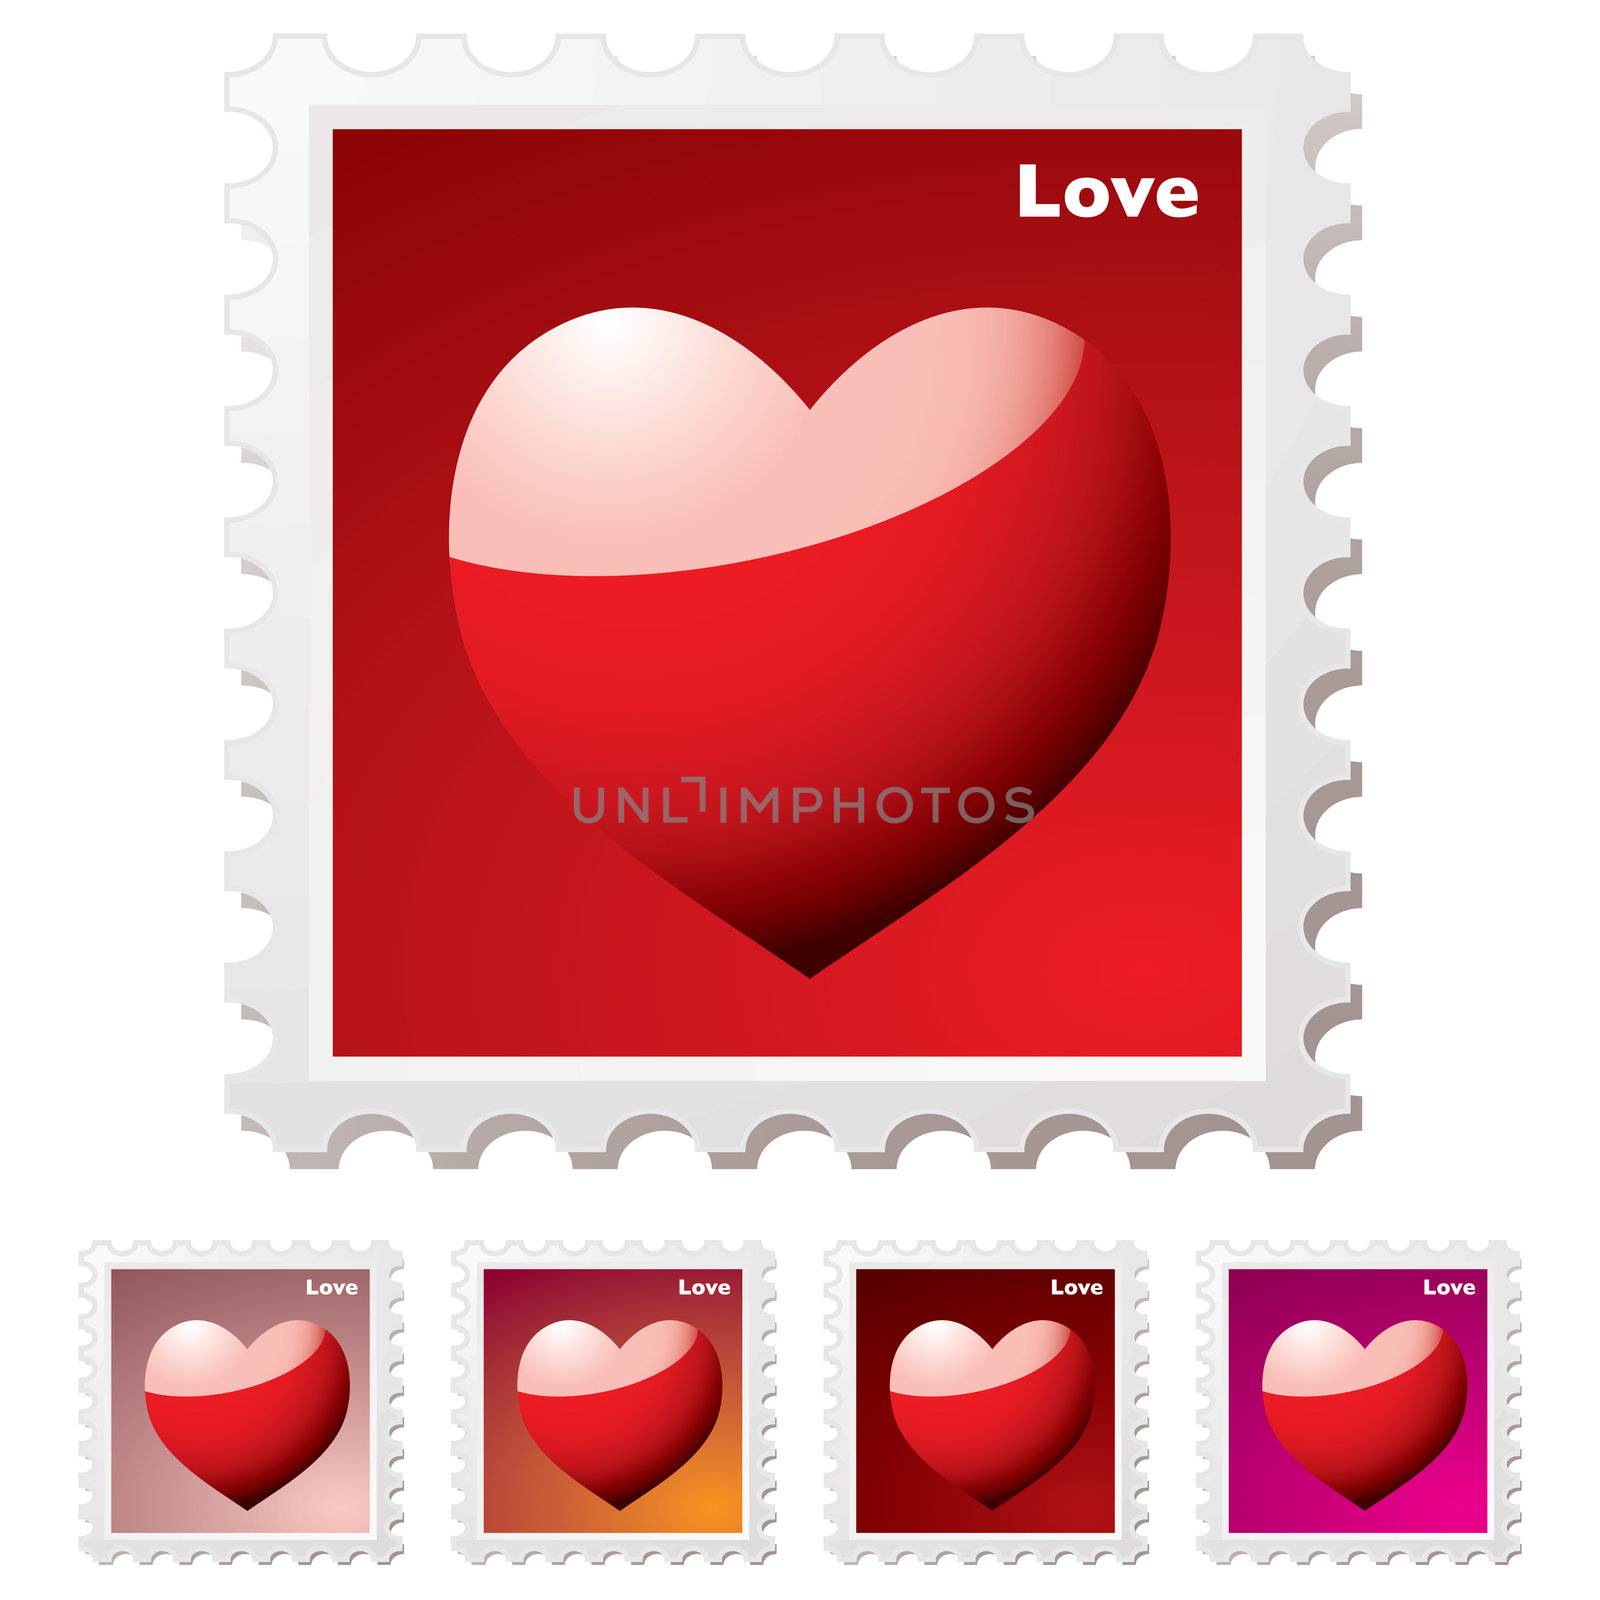 love stamp by nicemonkey